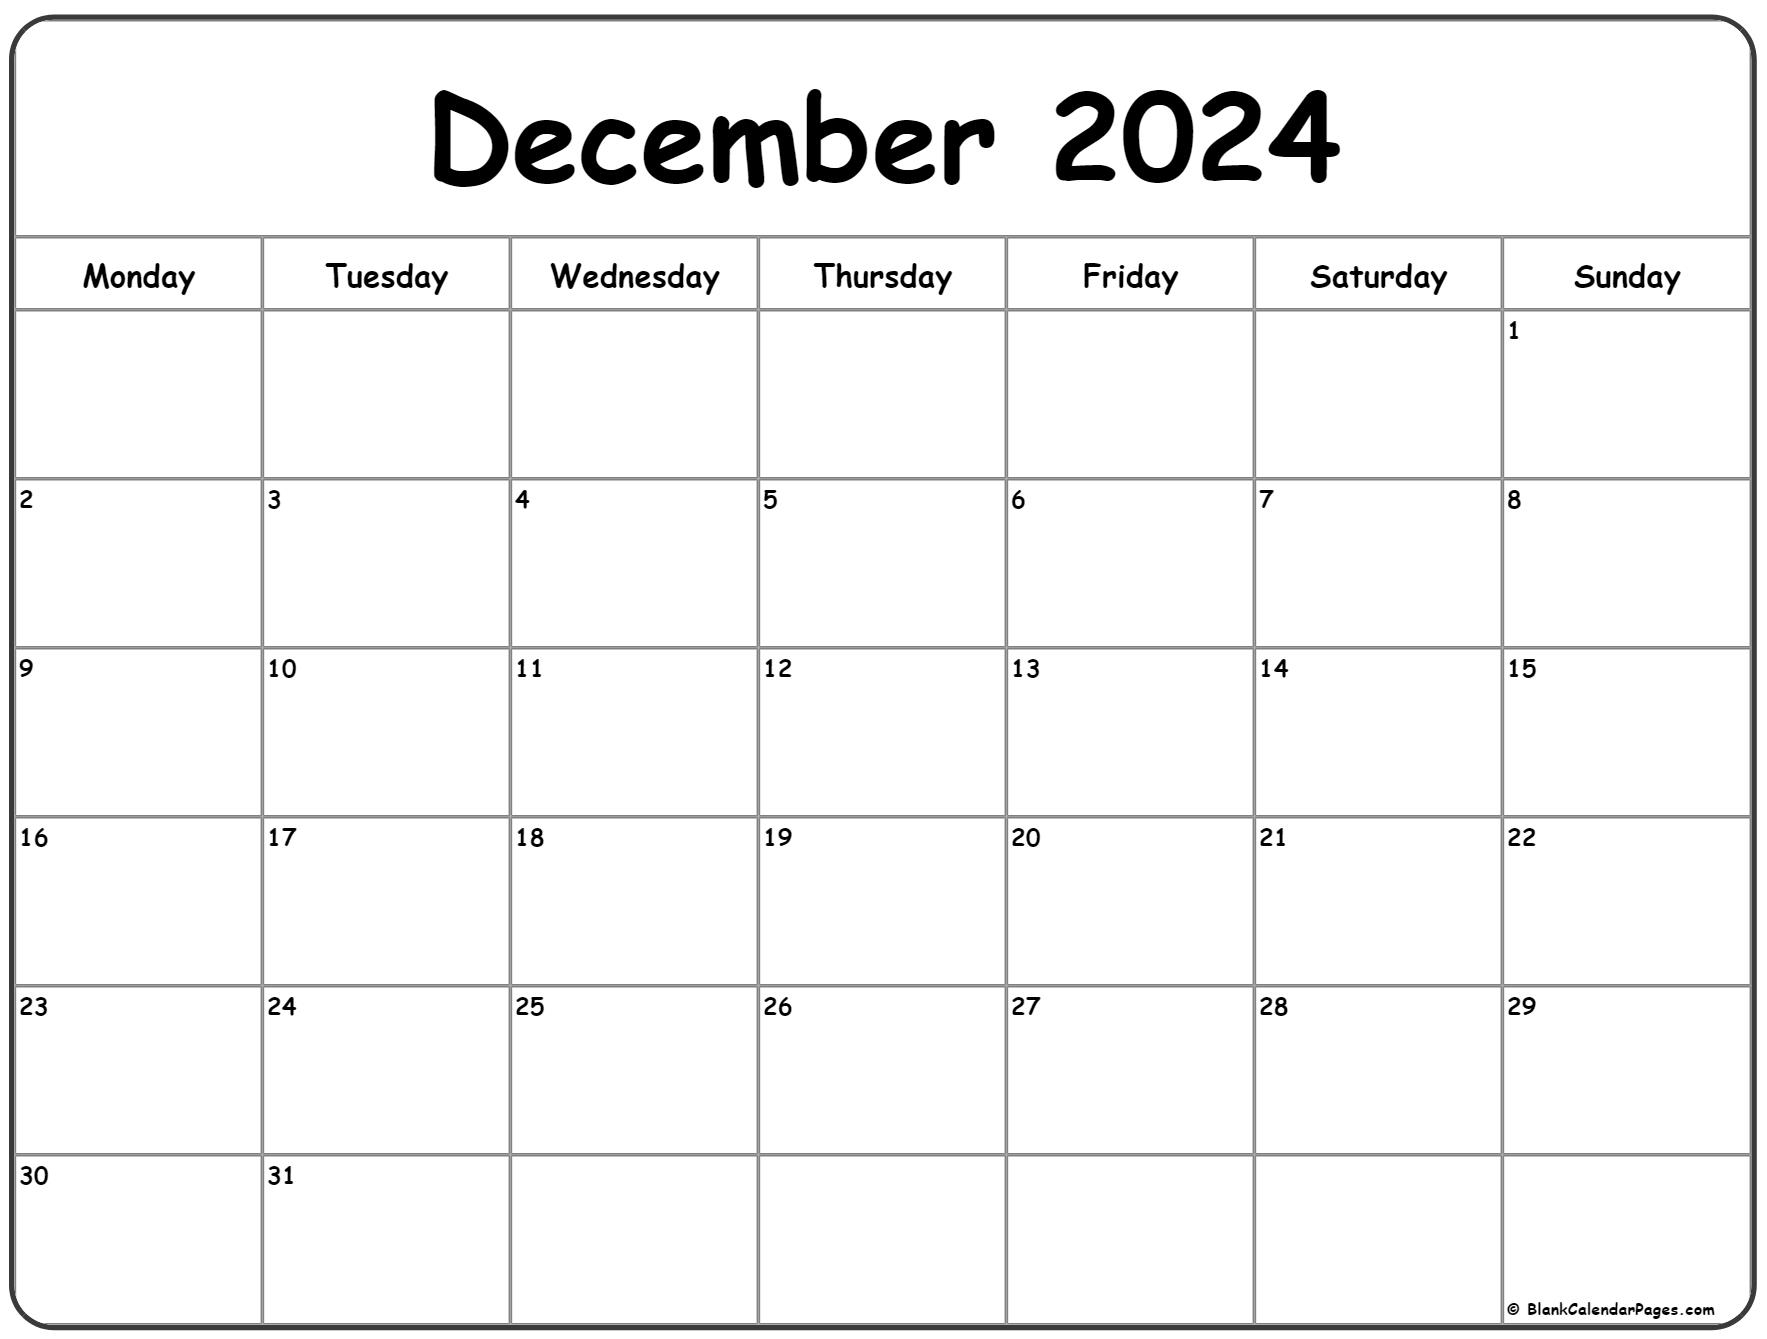 December 2024 Monday Calendar | Monday To Sunday for December 2024 Calendar Printable